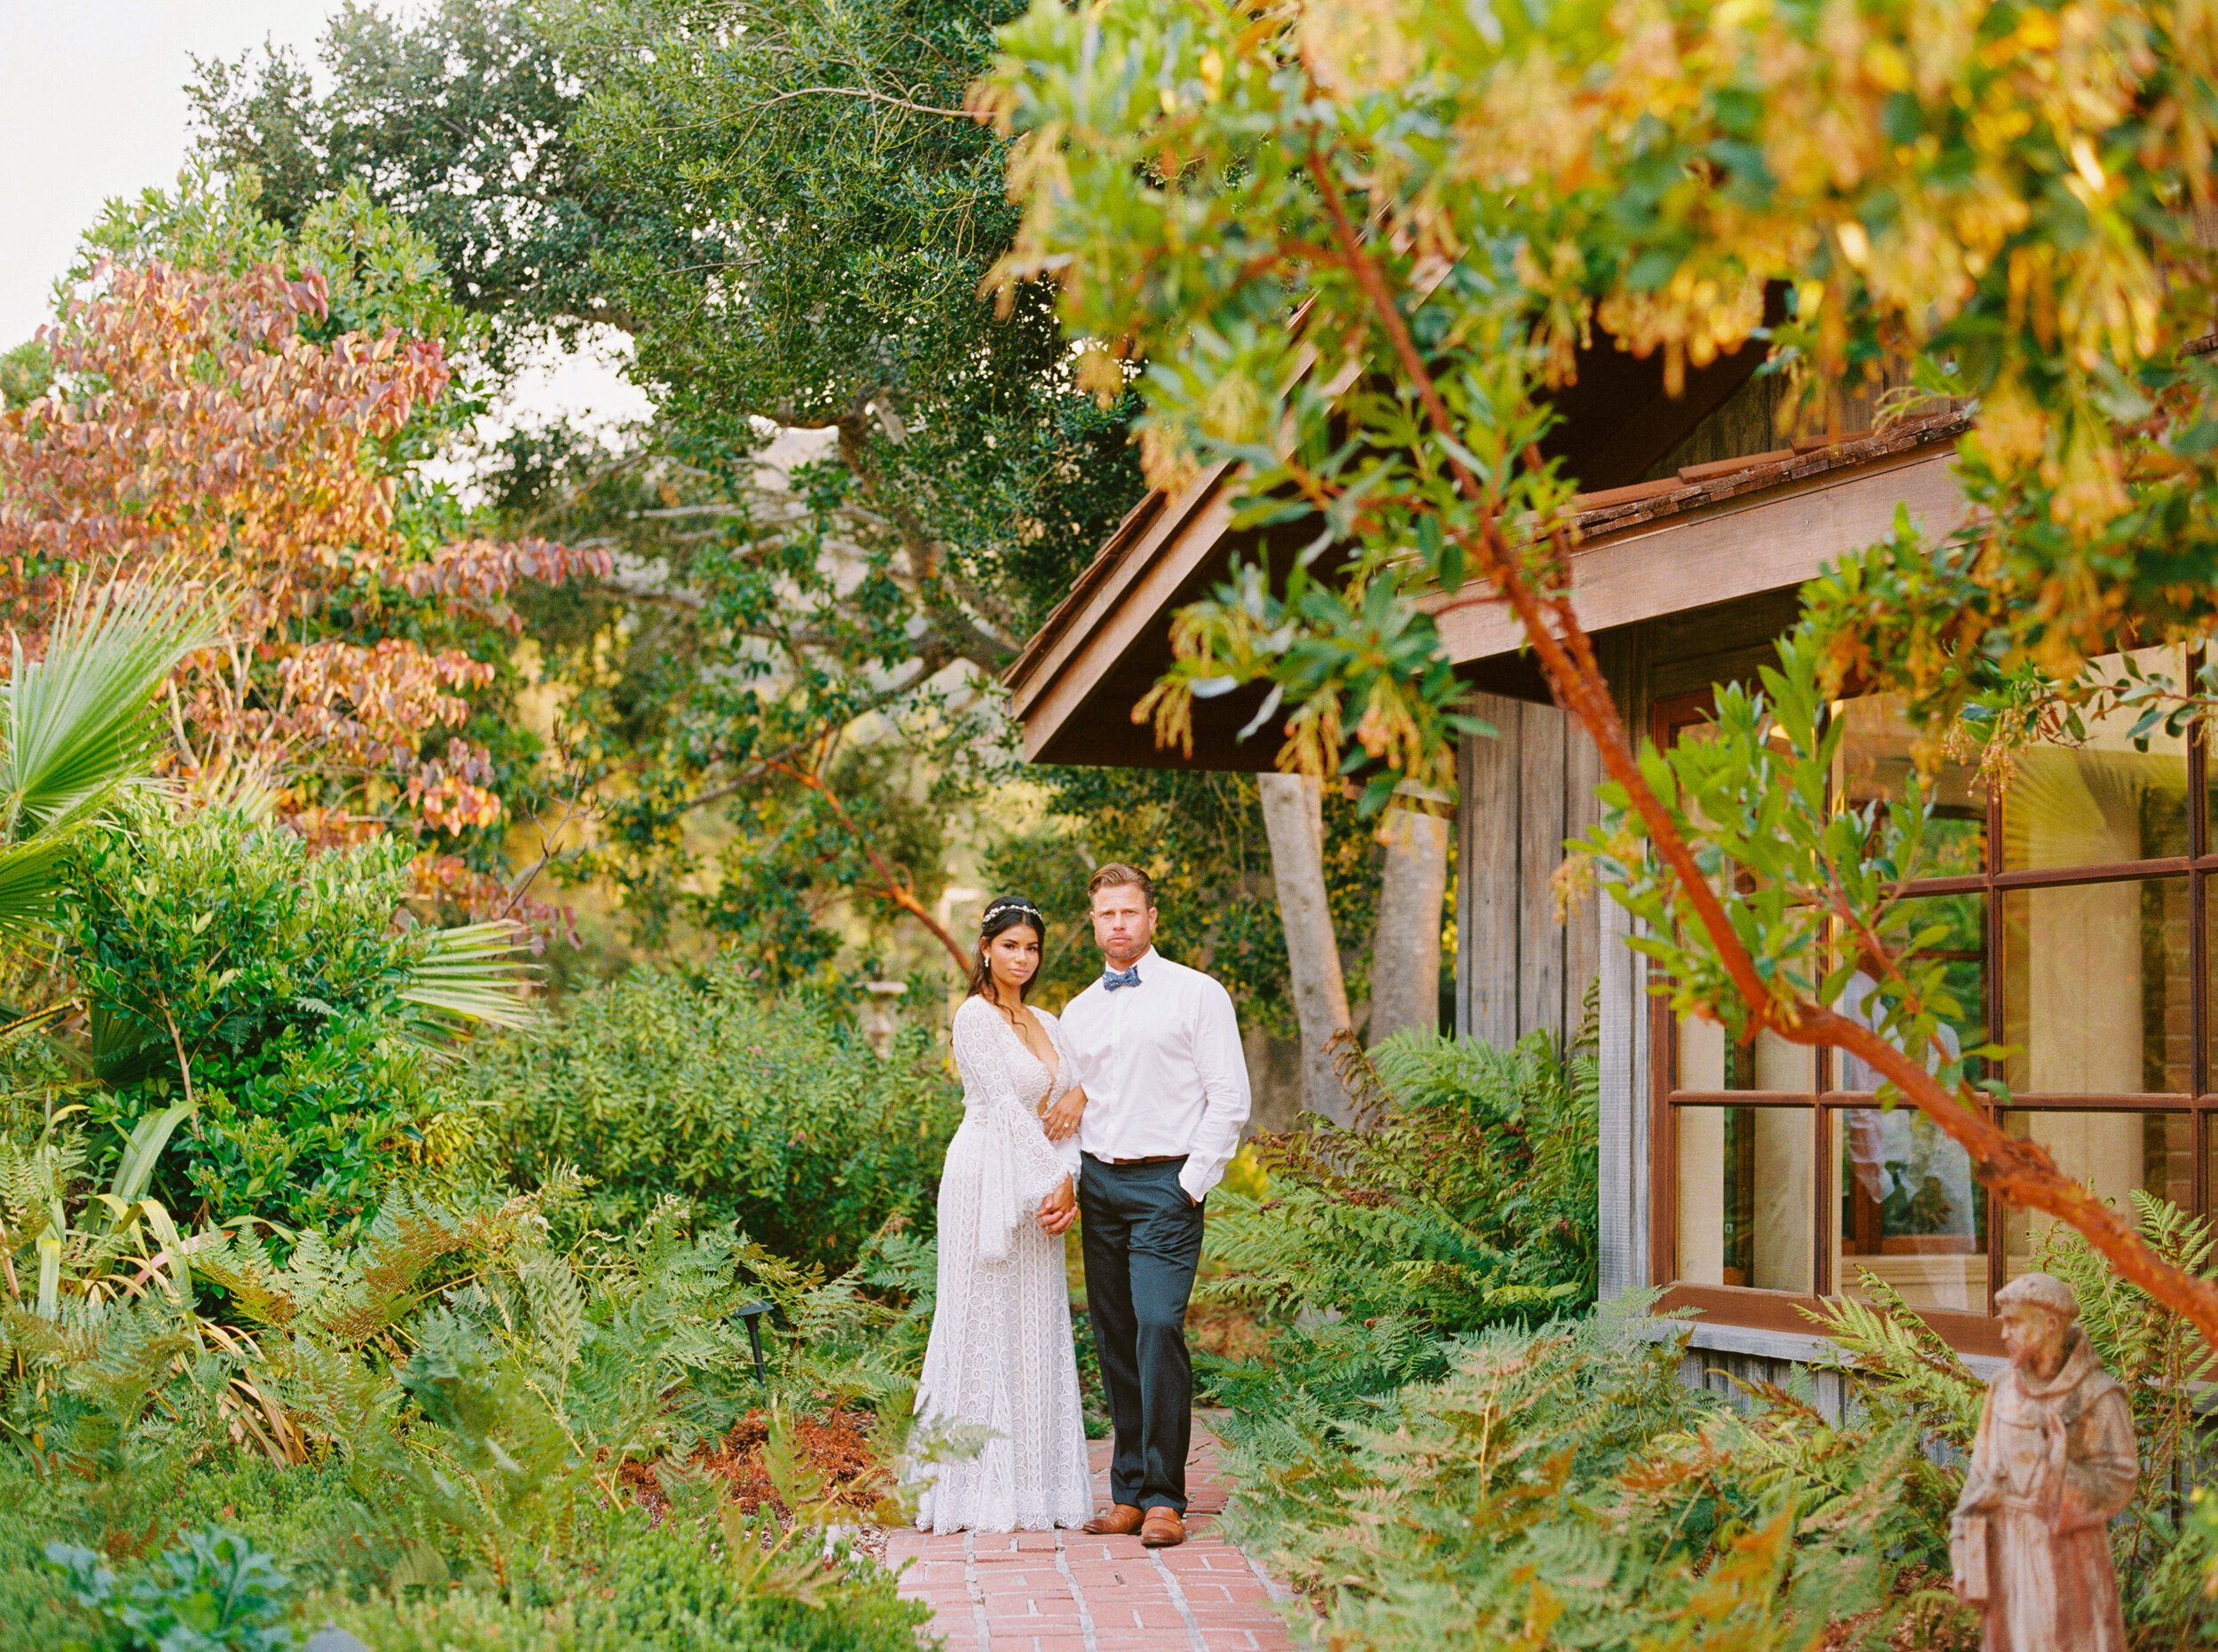 Sarahi Hadden - An Earthy Summer Boho Inspired Wedding with Sunset Hues at Gardener Ranch-100.jpg